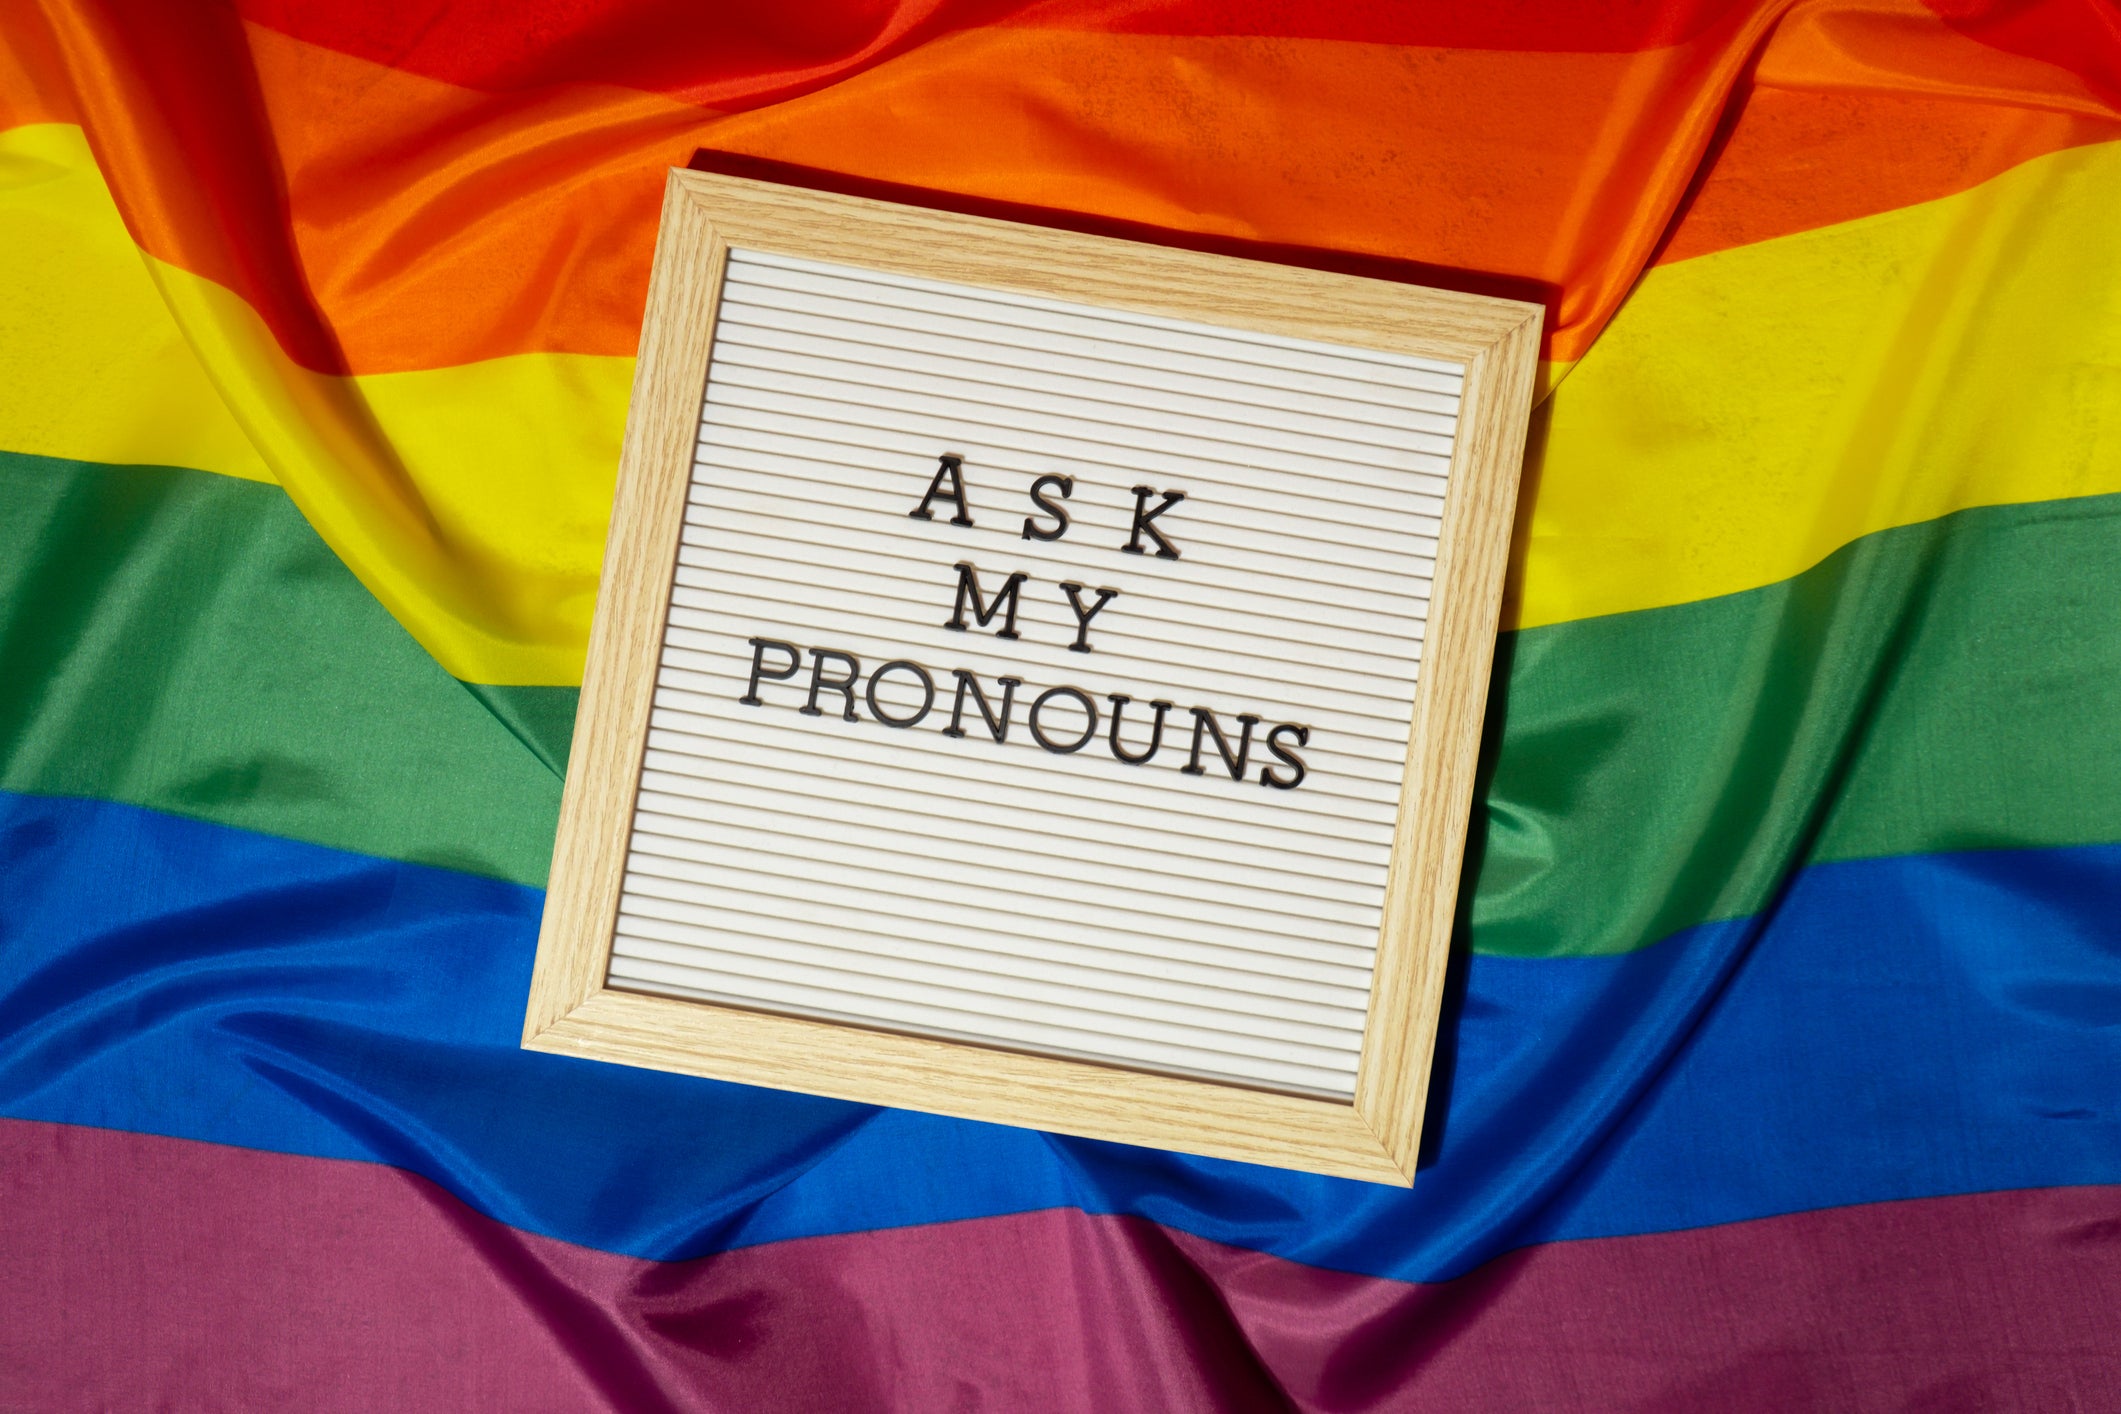 Ask my pronouns